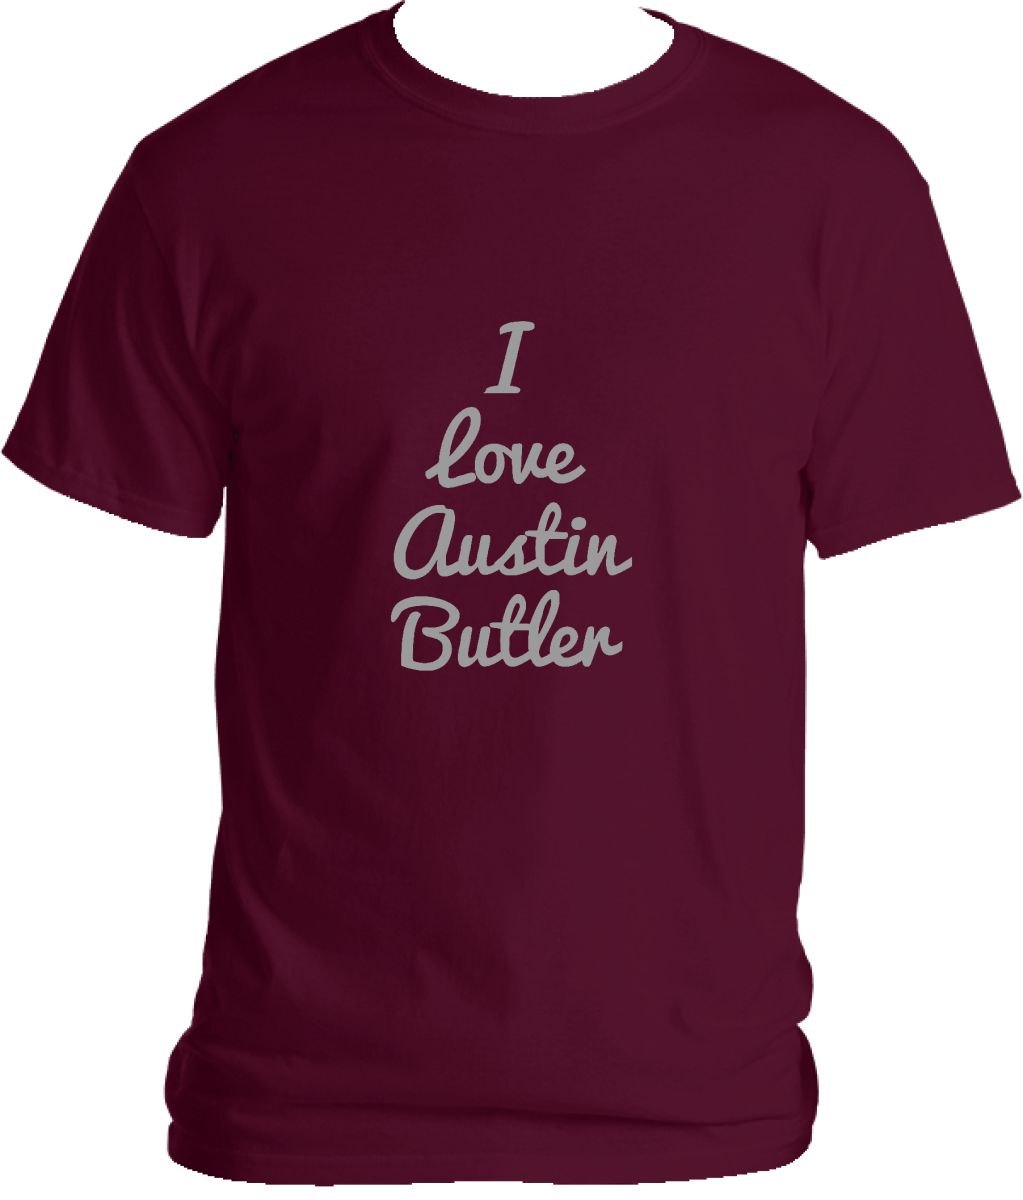 I Love Austin Butler Shirt (maroon)